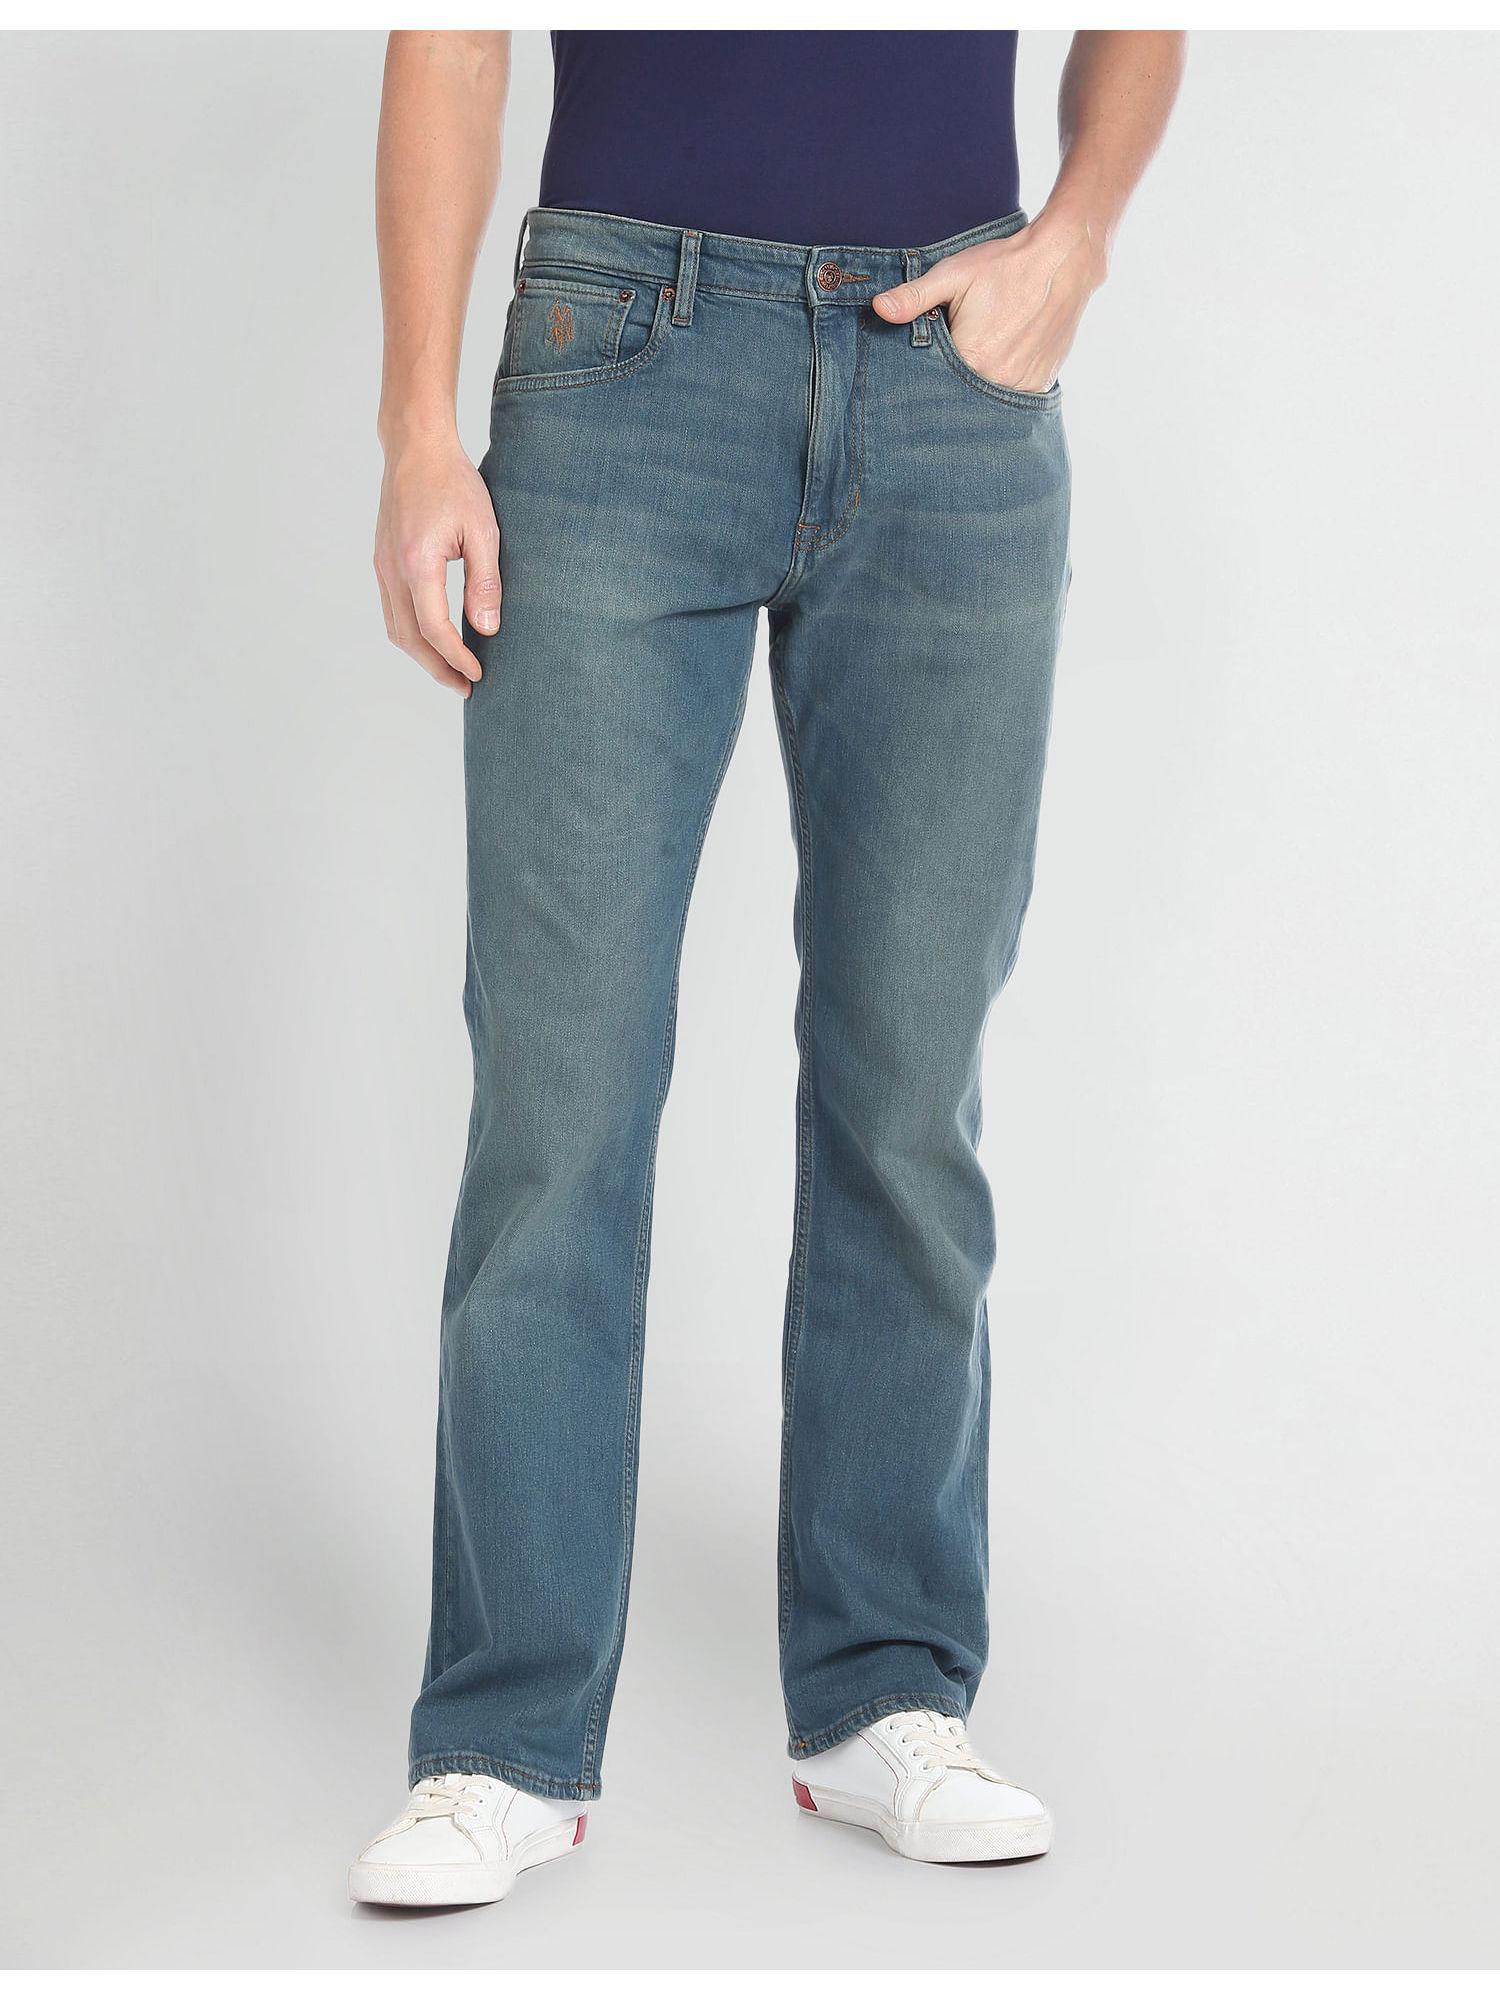 connor boot cut fit dark blue jeans